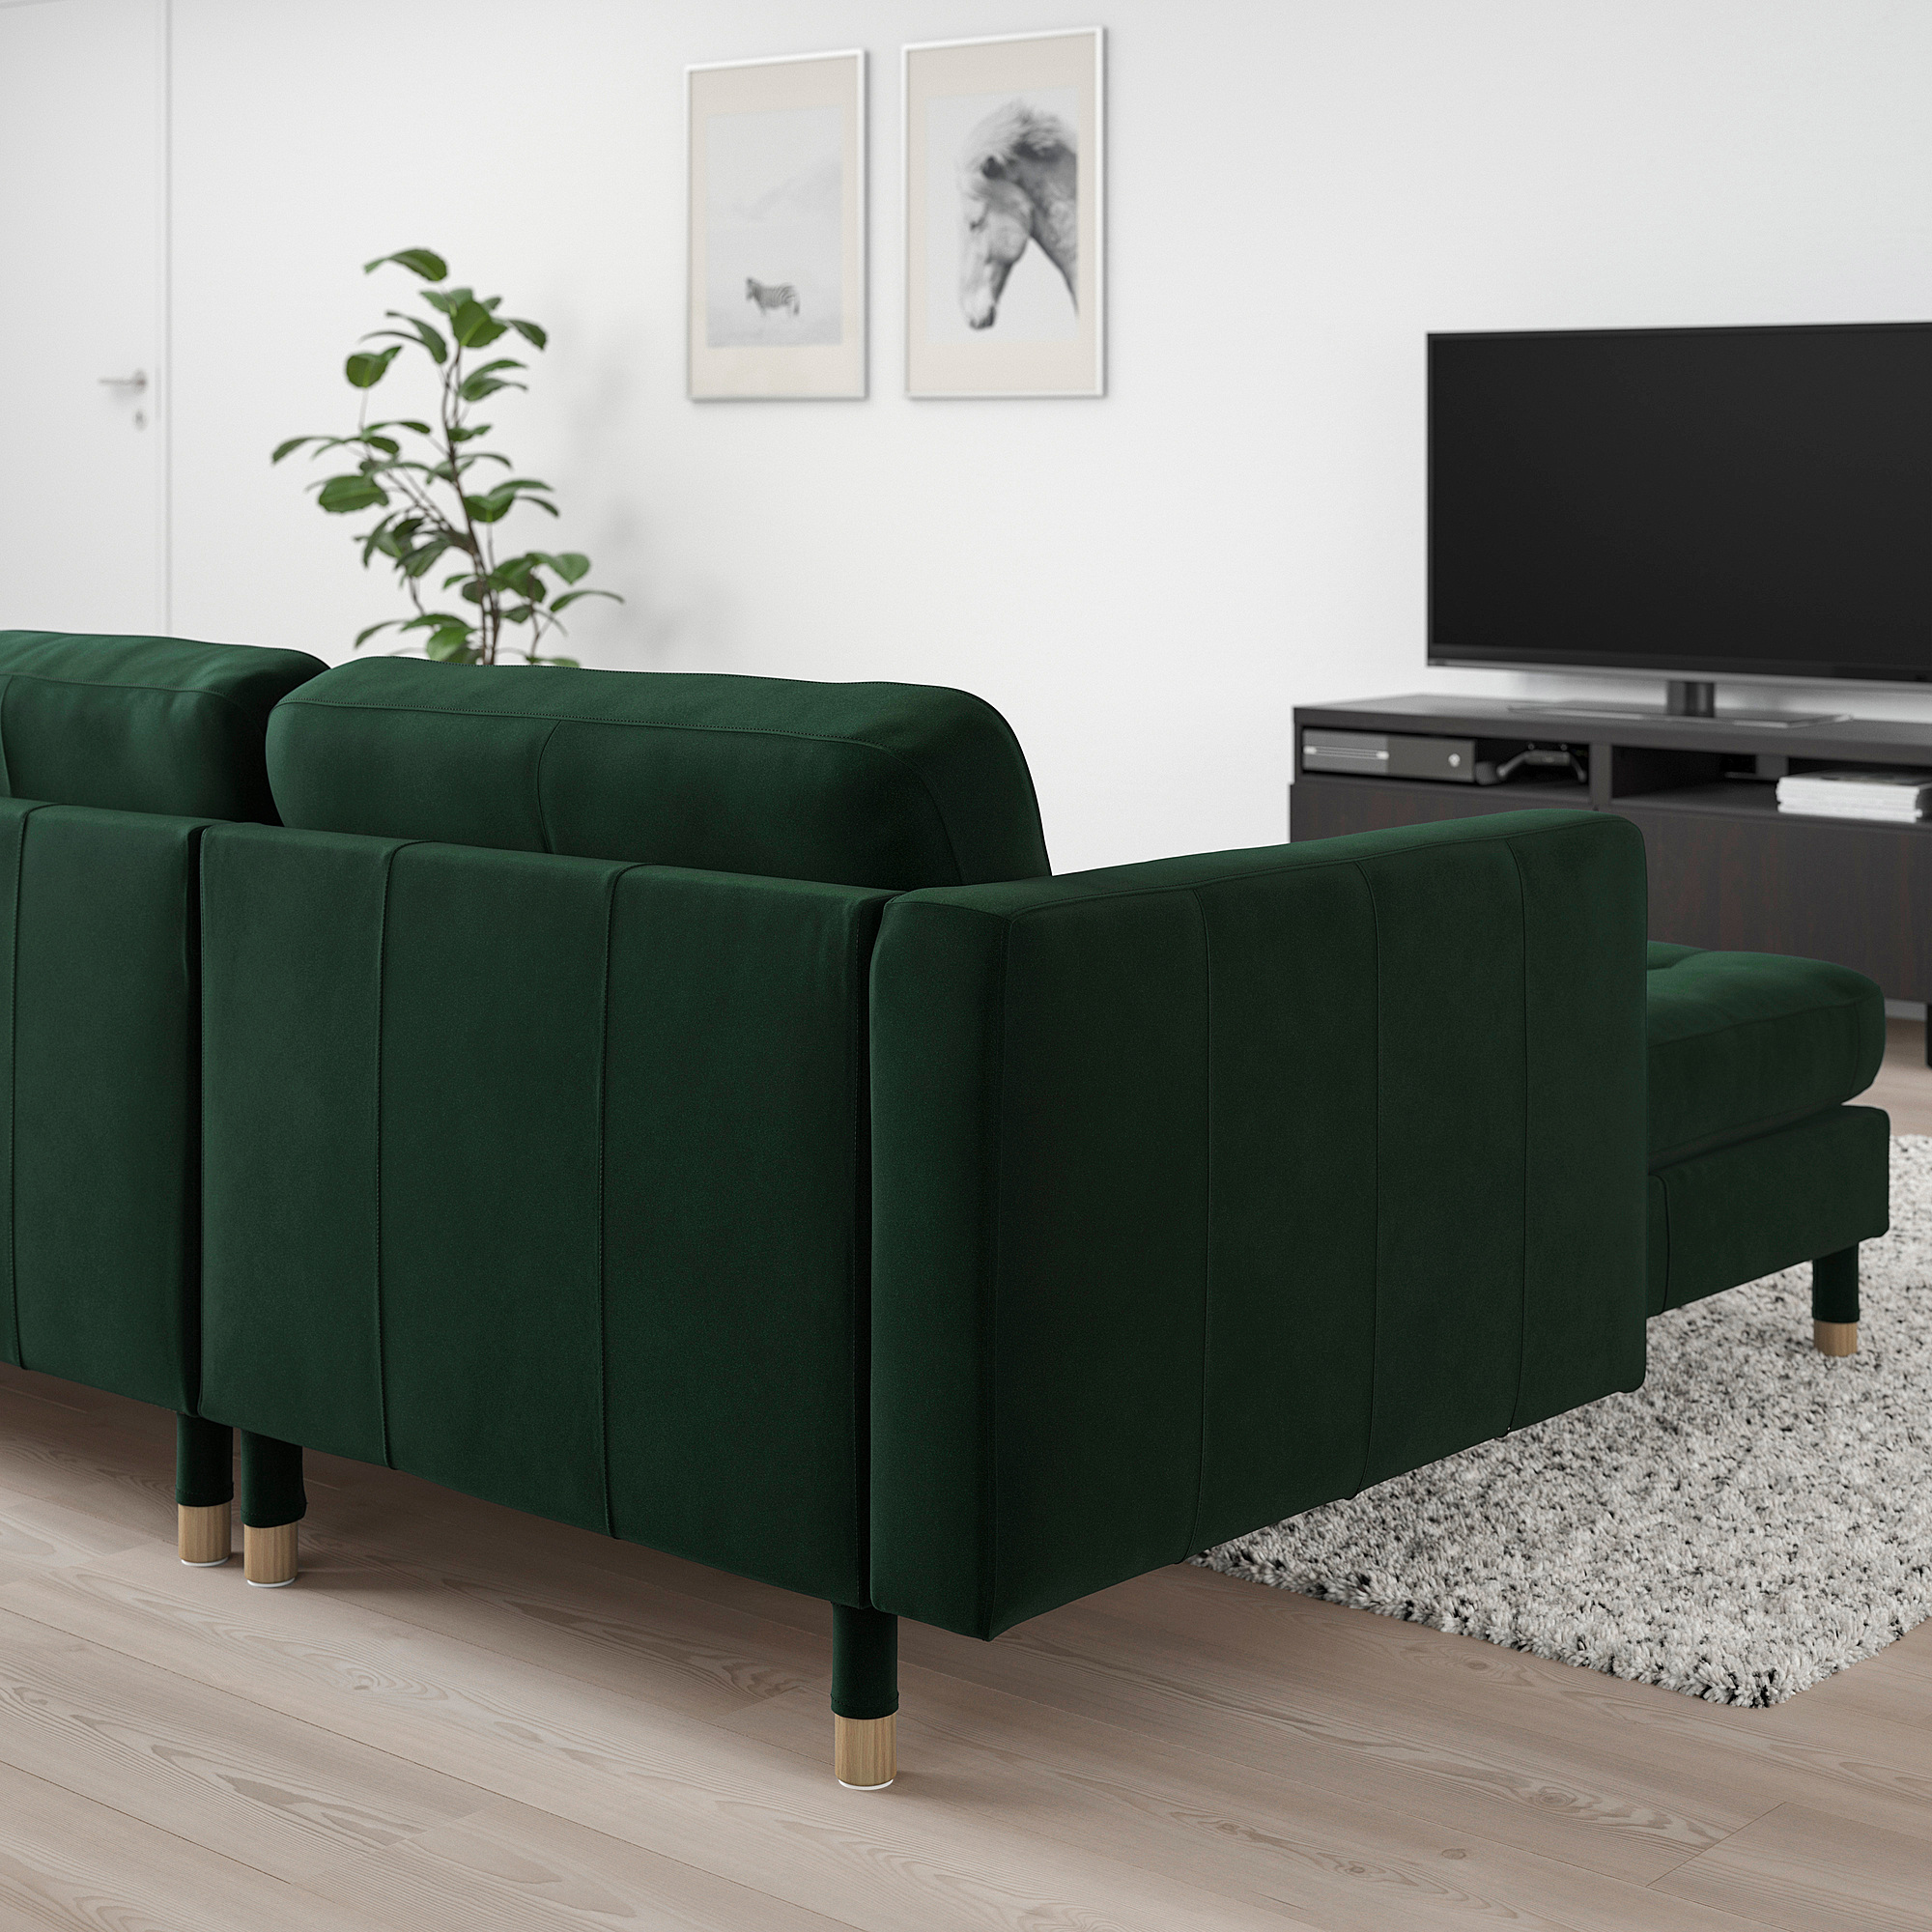 LANDSKRONA 5-seat sofa